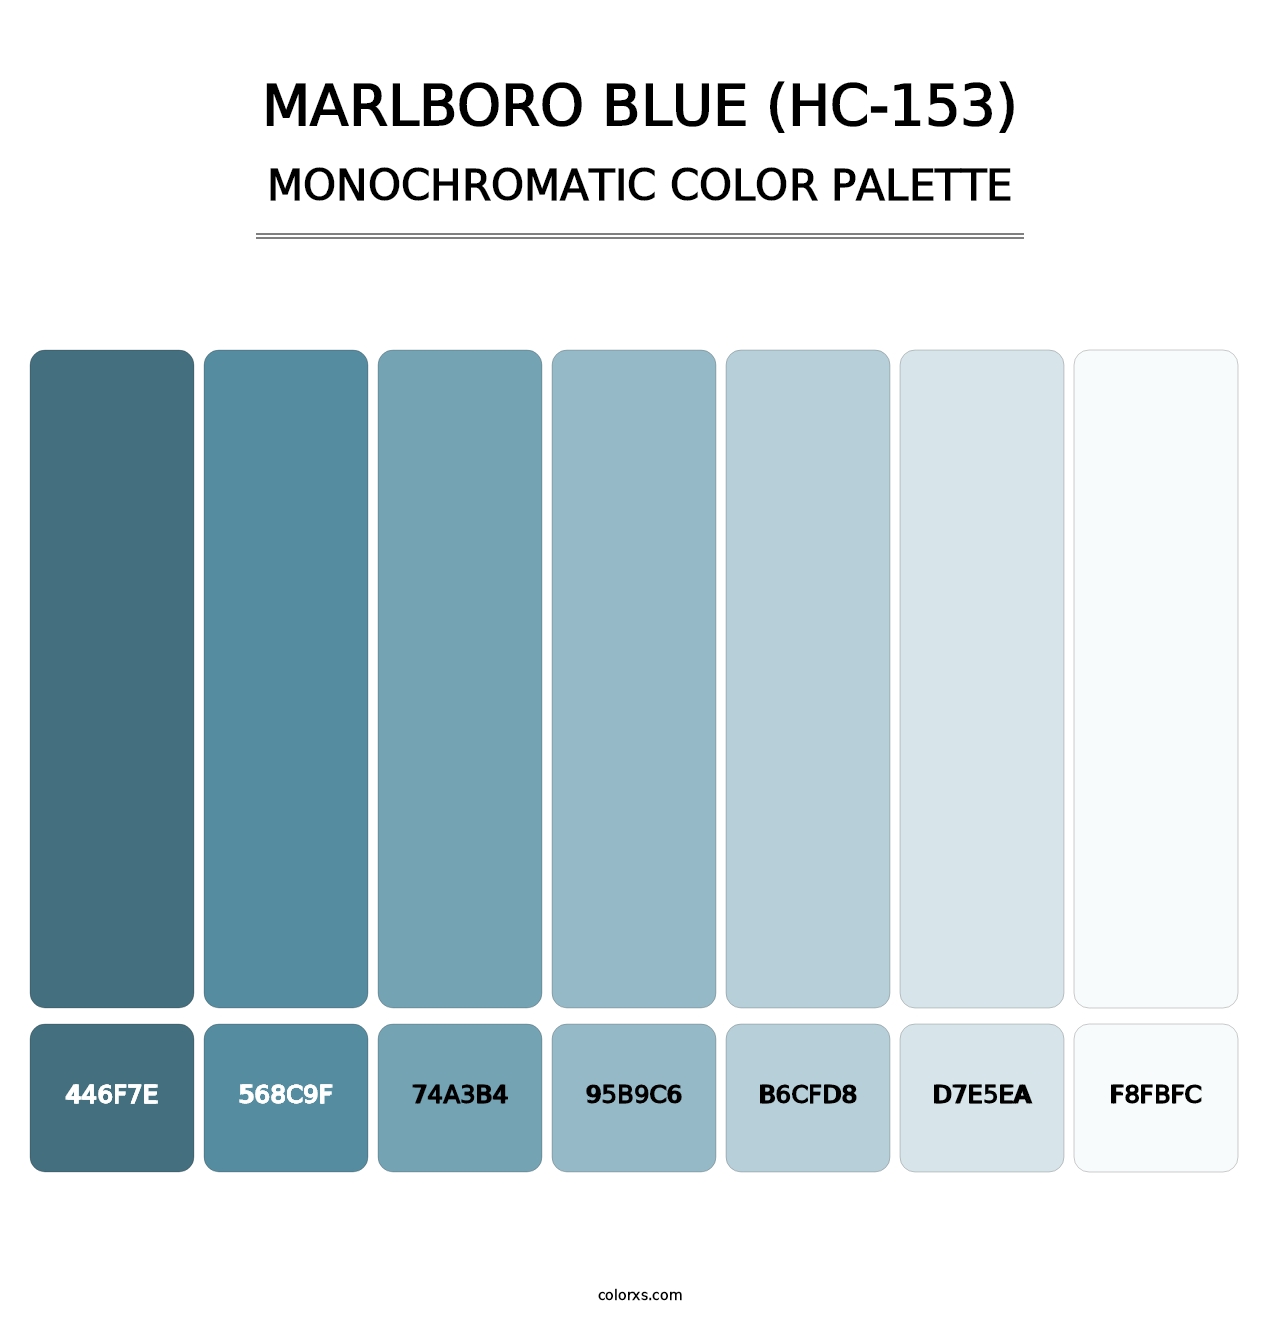 Marlboro Blue (HC-153) - Monochromatic Color Palette